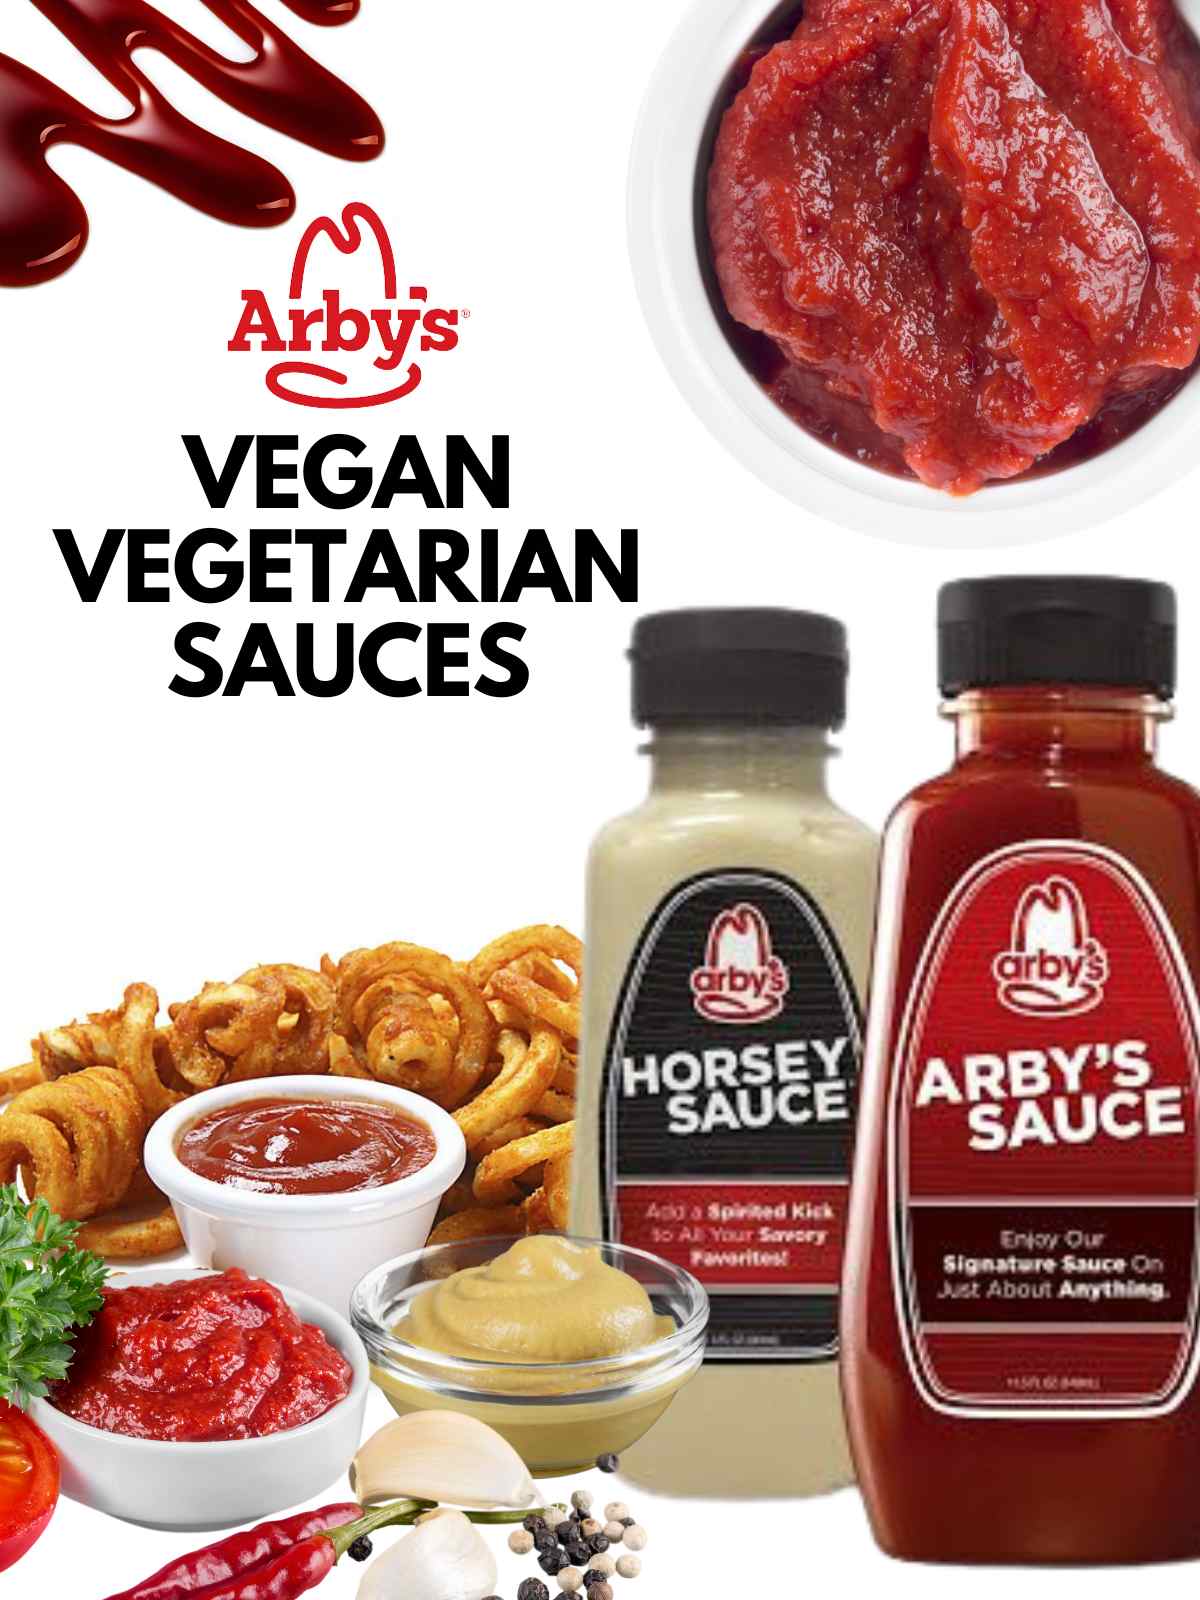 Arby's Vegan Sauces.